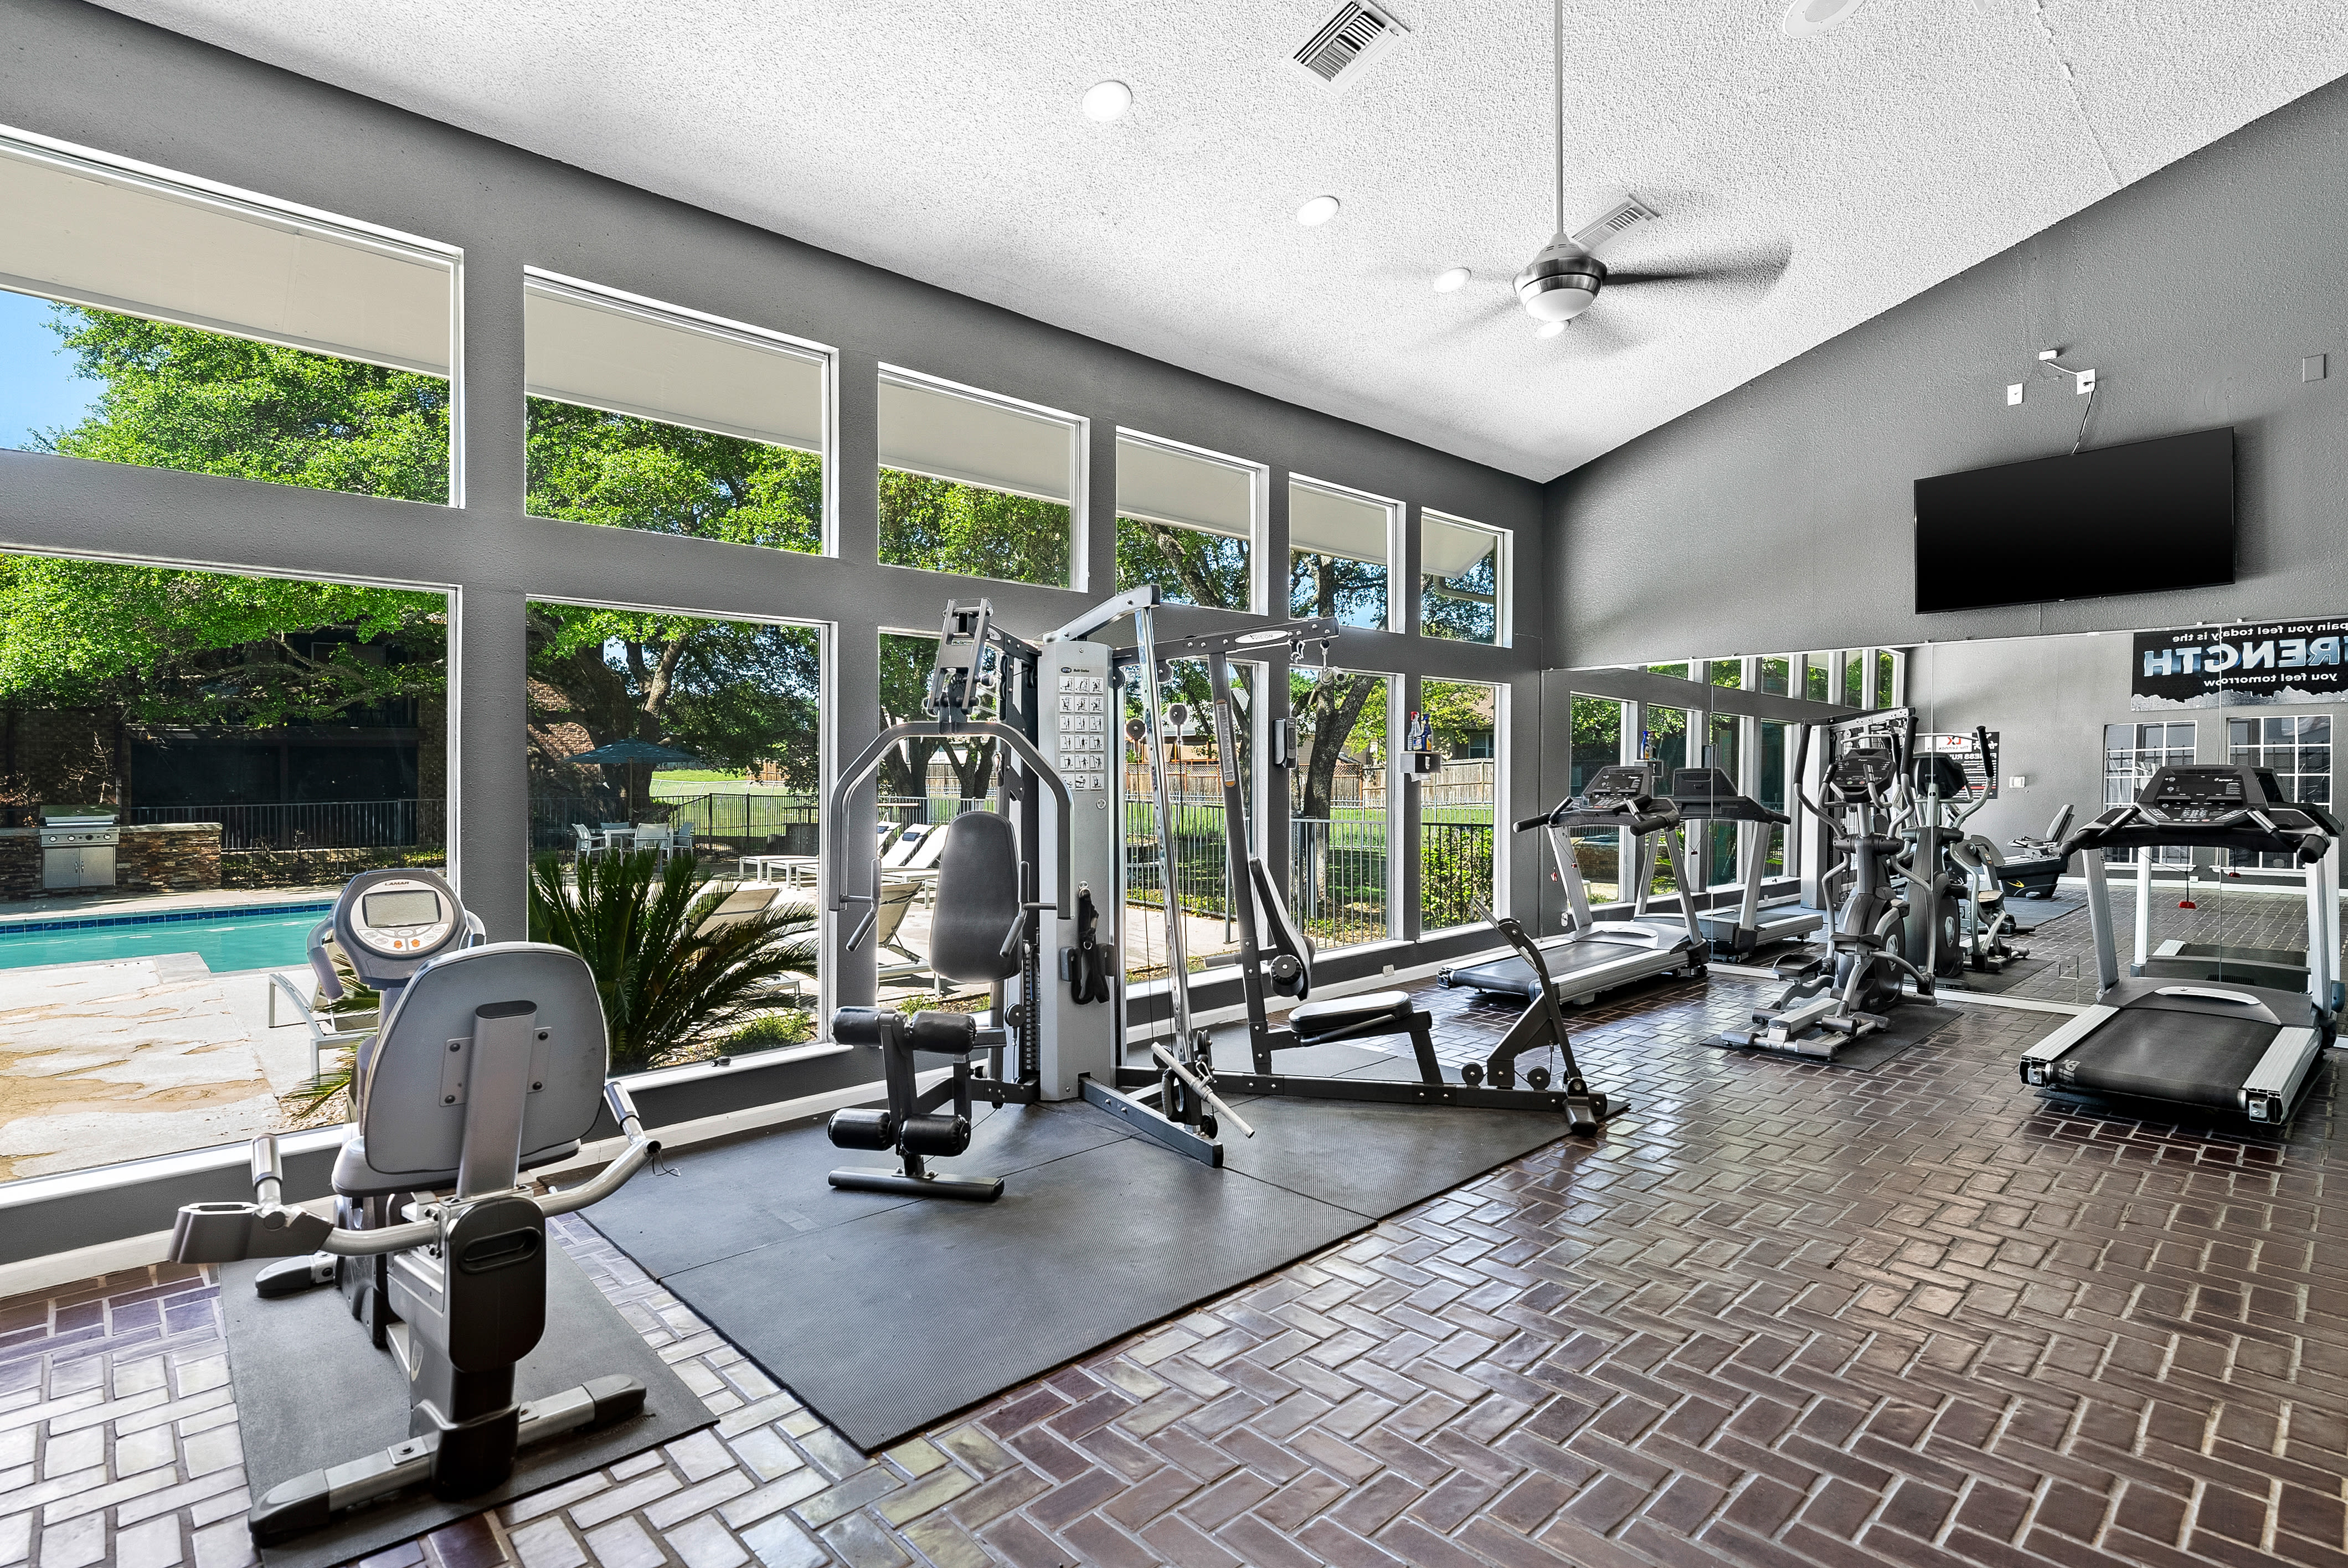 Fitness center at The Lennox in San Antonio, Texas